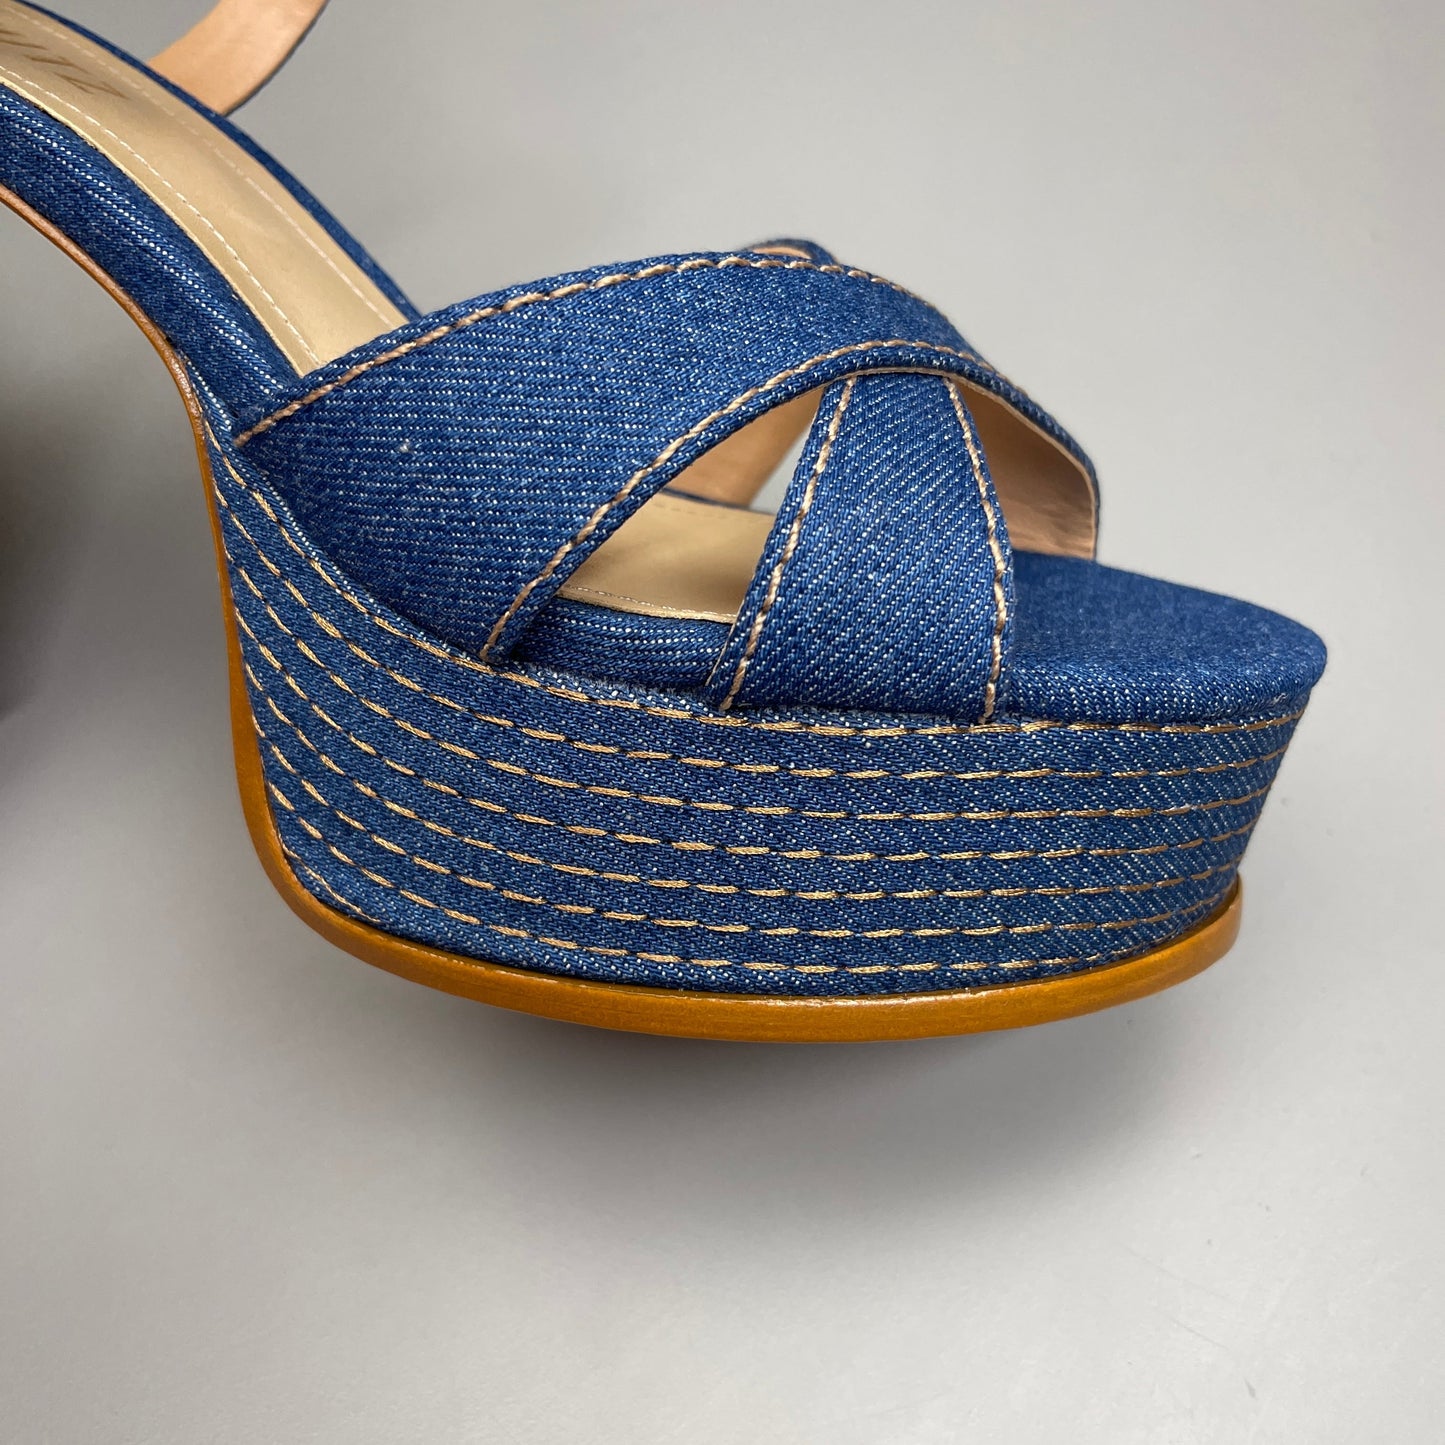 SCHUTZ Keefa Casual Denim Women's 4" Heeled Sandal Platform Blue Sz 6B (New)